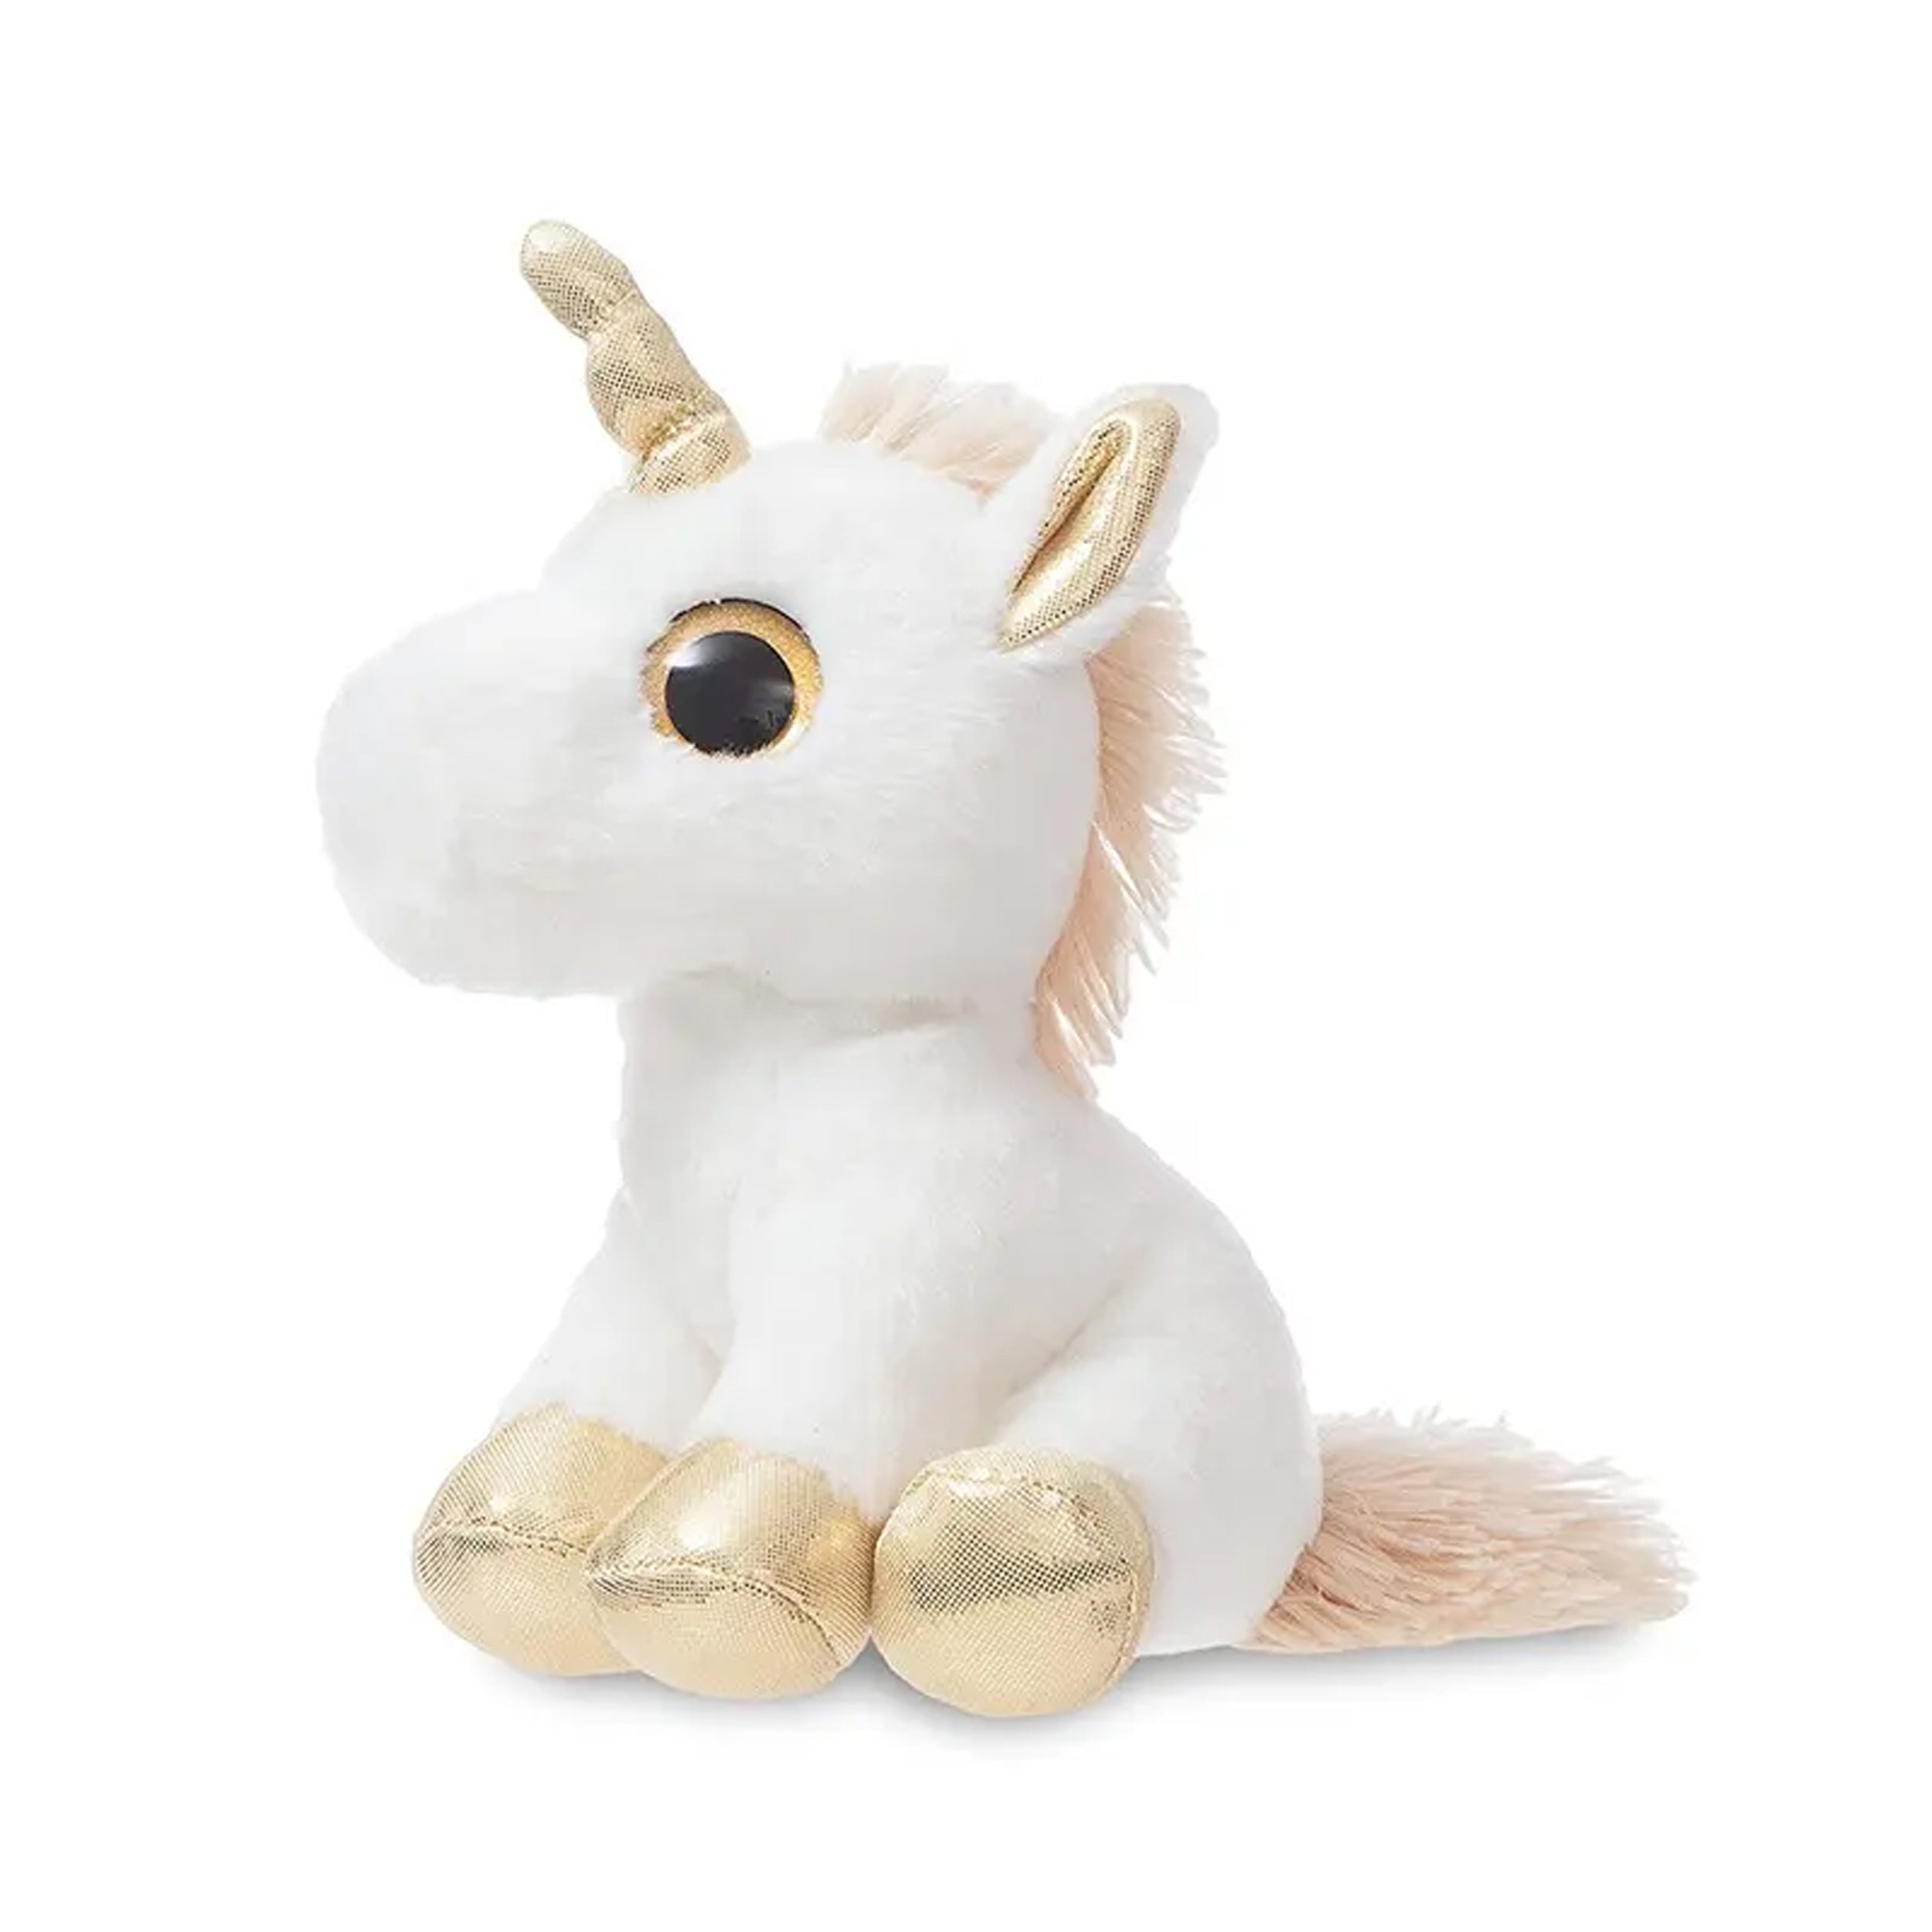 Unleash Your Child's Imagination with a Magical Unicorn Big Stuffed Animal Plush Toy